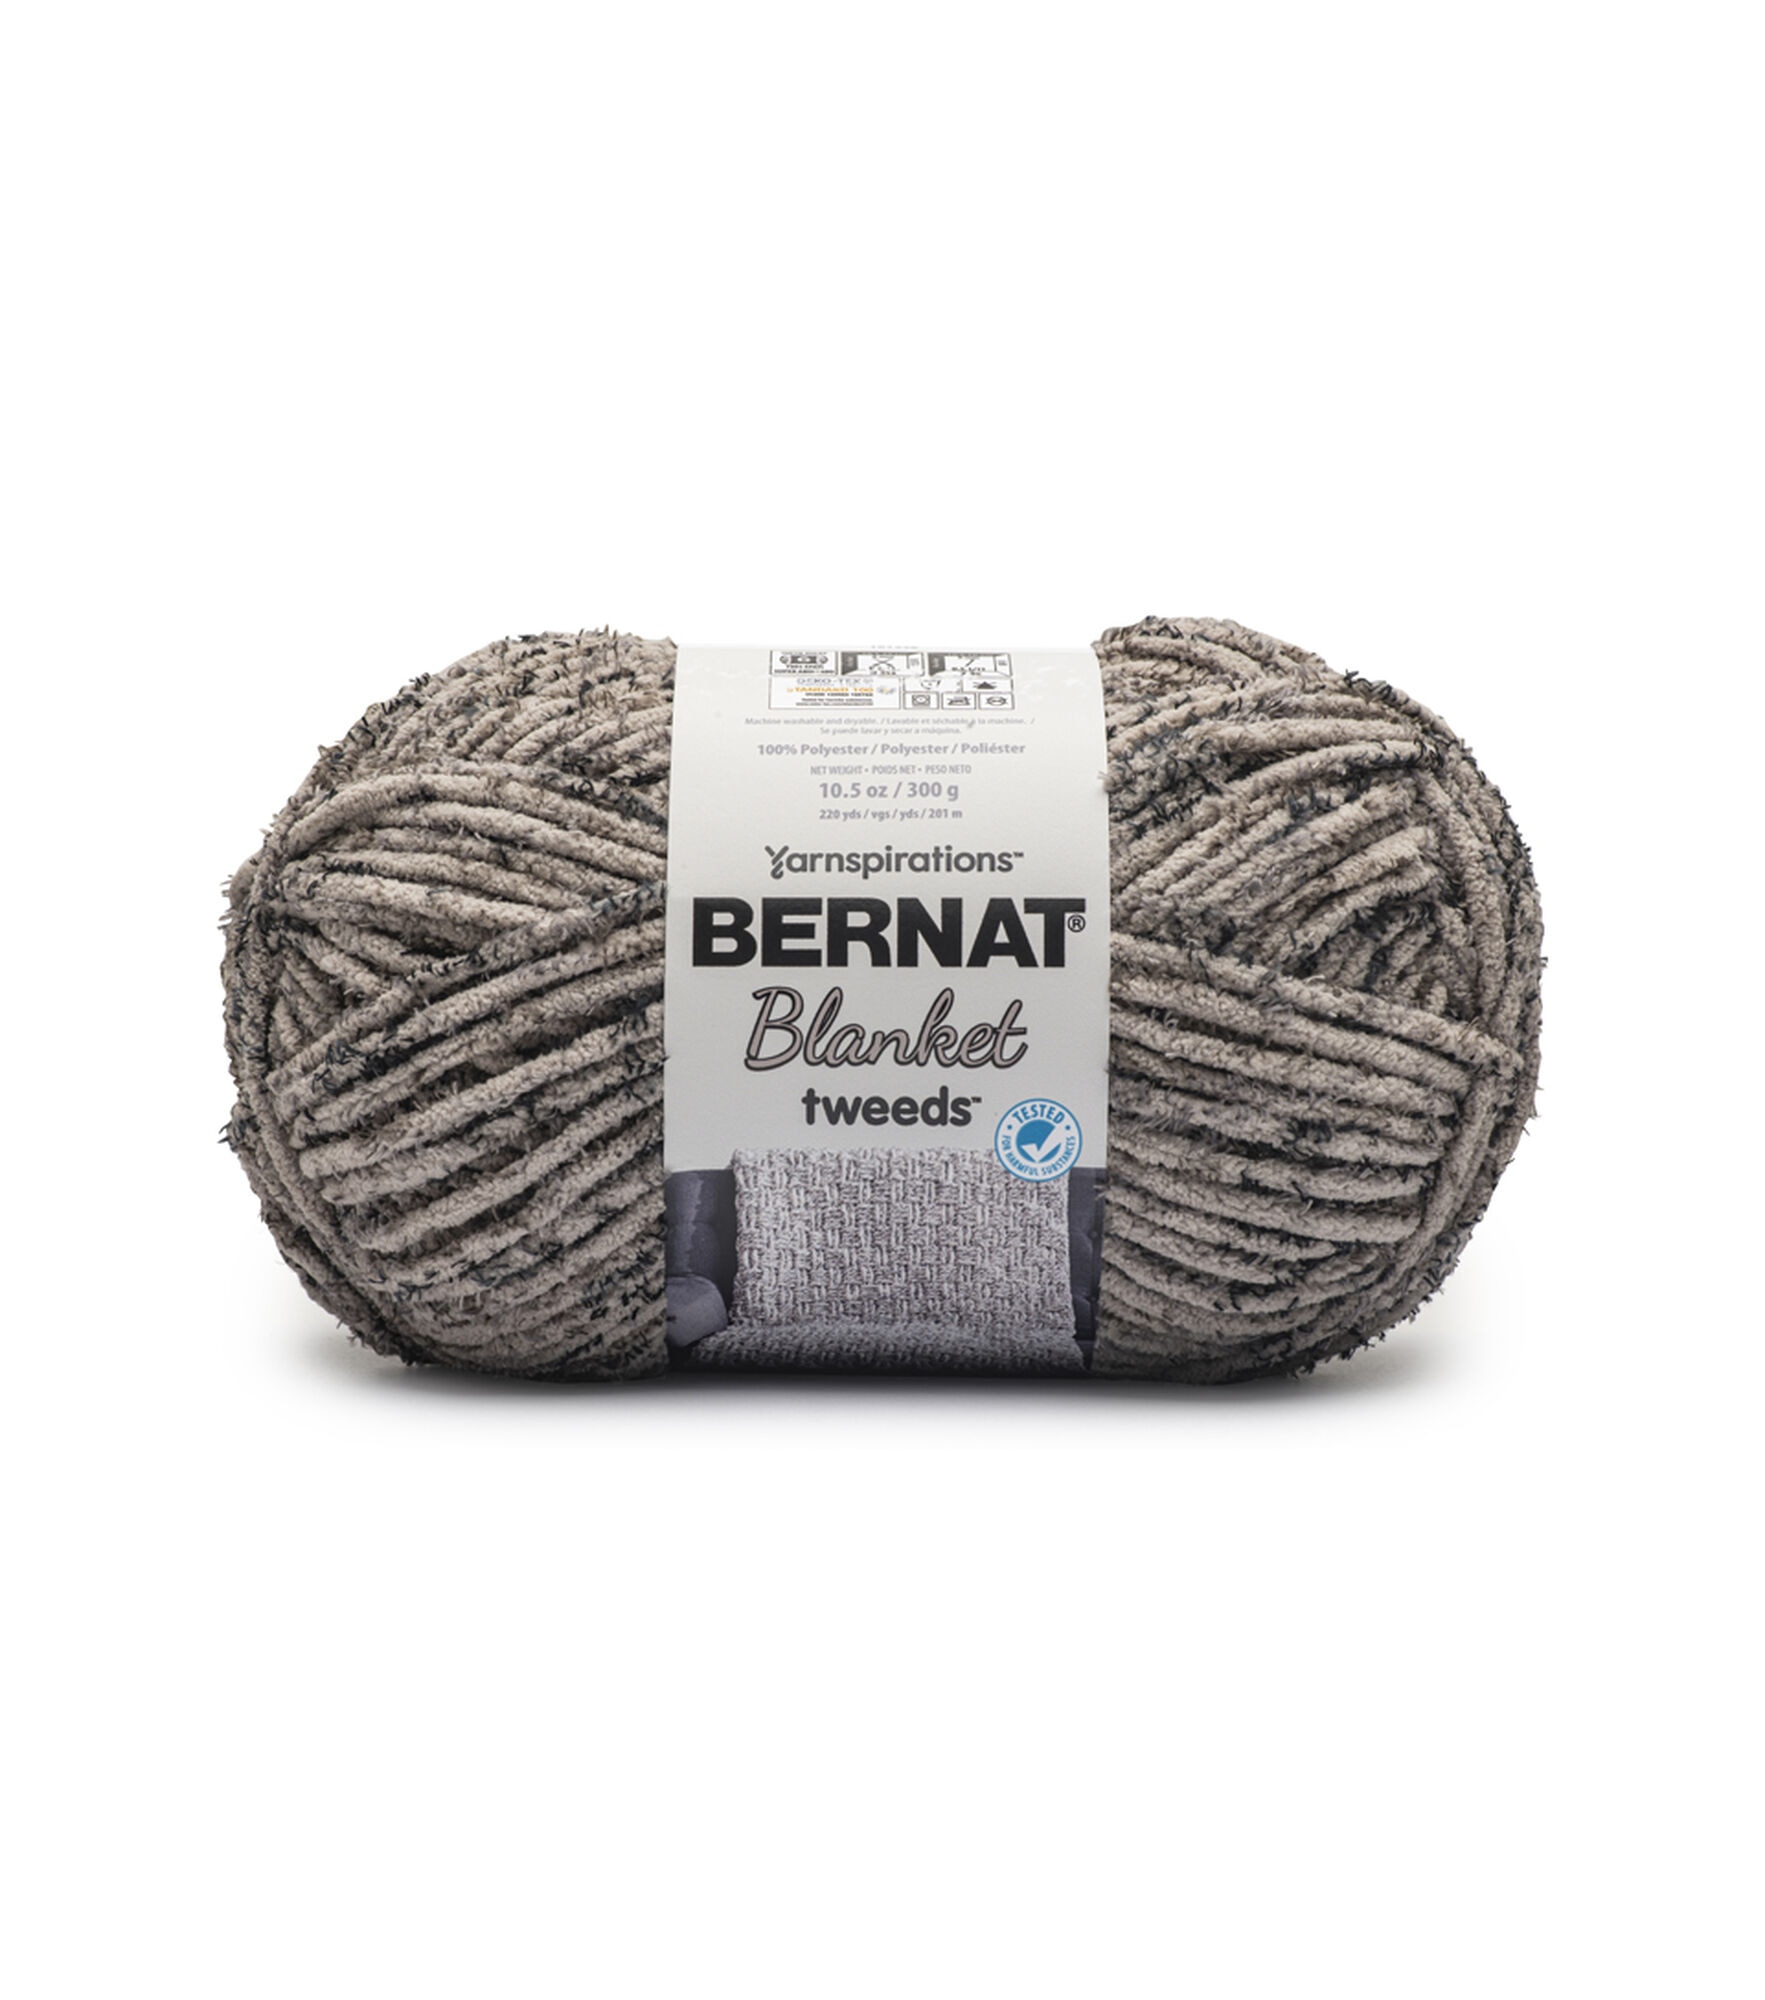 Bernat Blanket Yarn (300g/10.5oz)